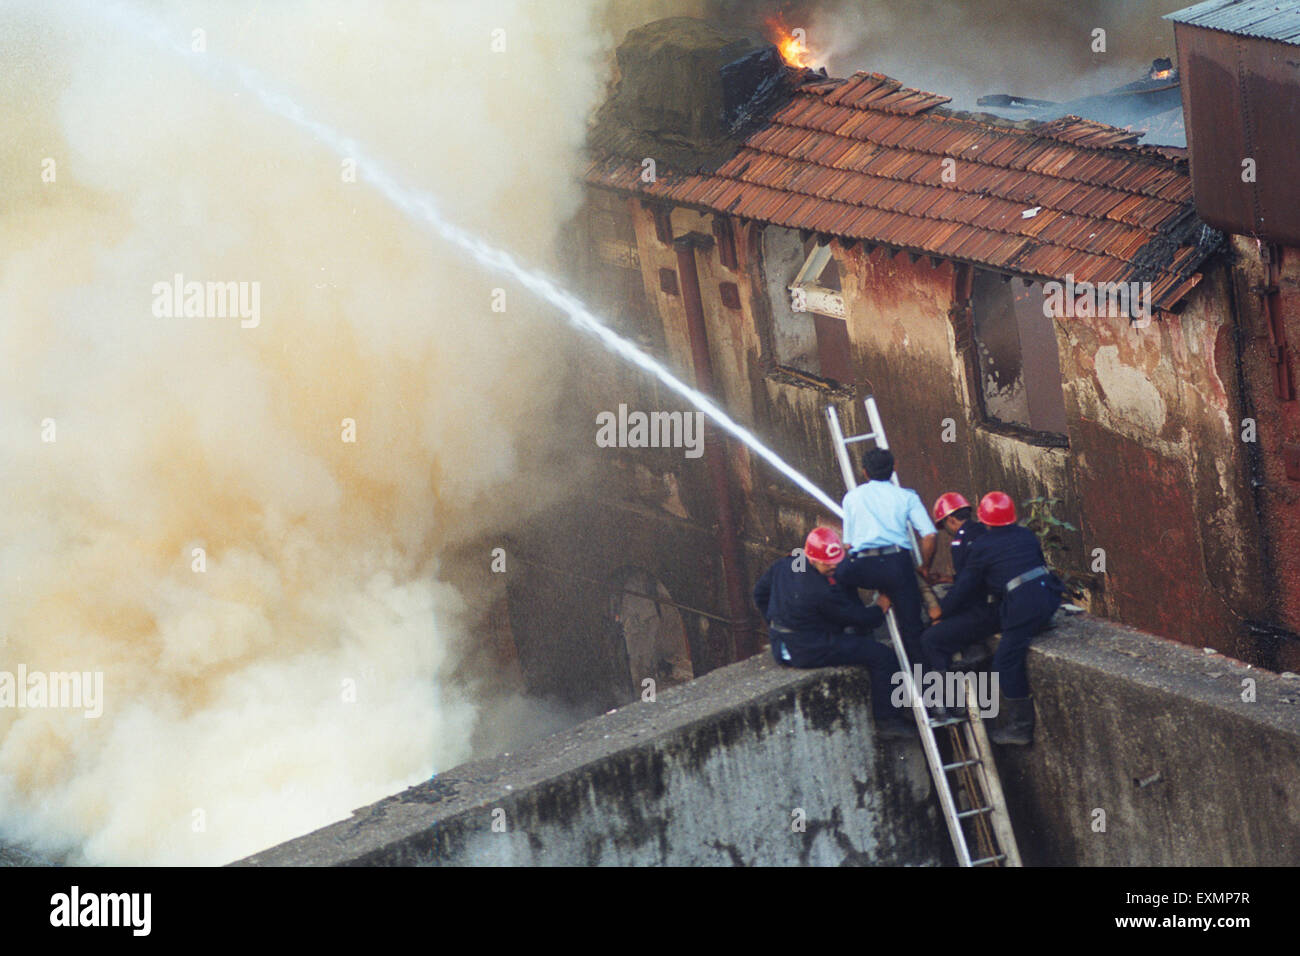 Fire brigade men spraying water to control fire mumbai India Stock Photo